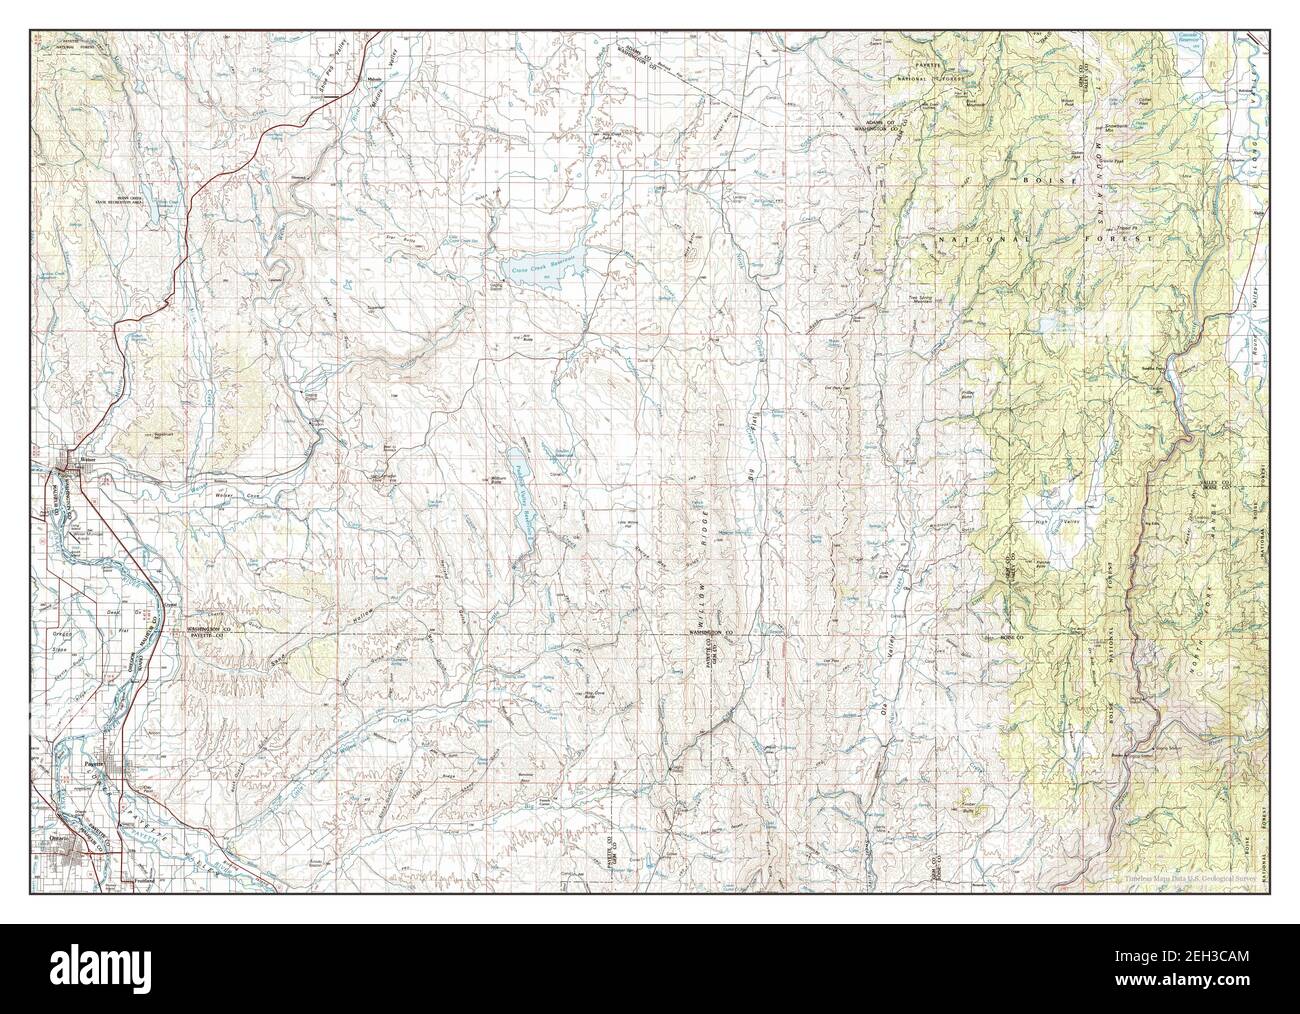 Weiser, Idaho, map 1980, 1:100000, United States of America by Timeless Maps, data U.S. Geological Survey Stock Photo